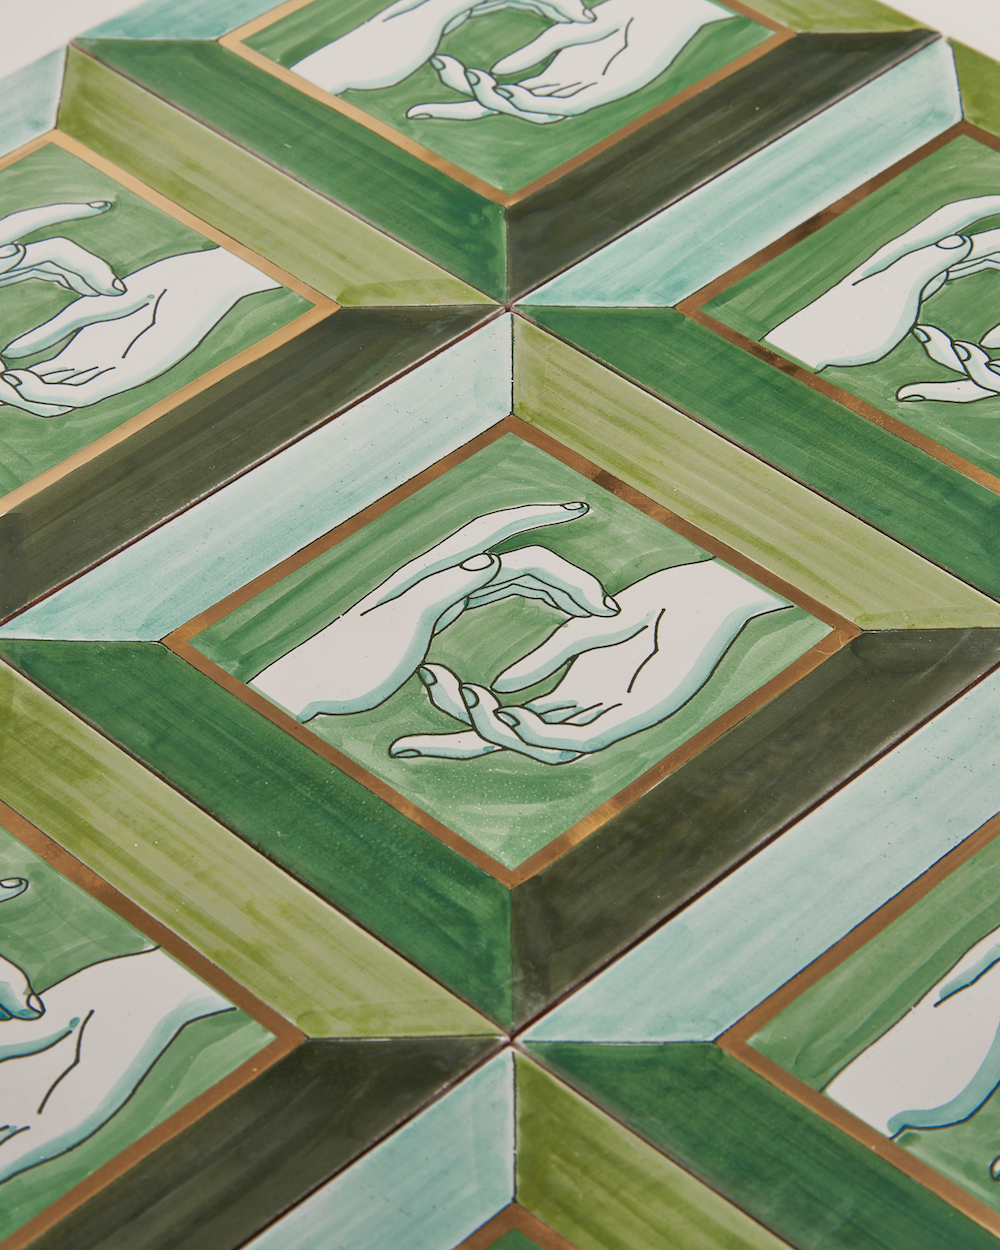 Tiles for Alfar 8, courtesy of Ignasi Monrea.